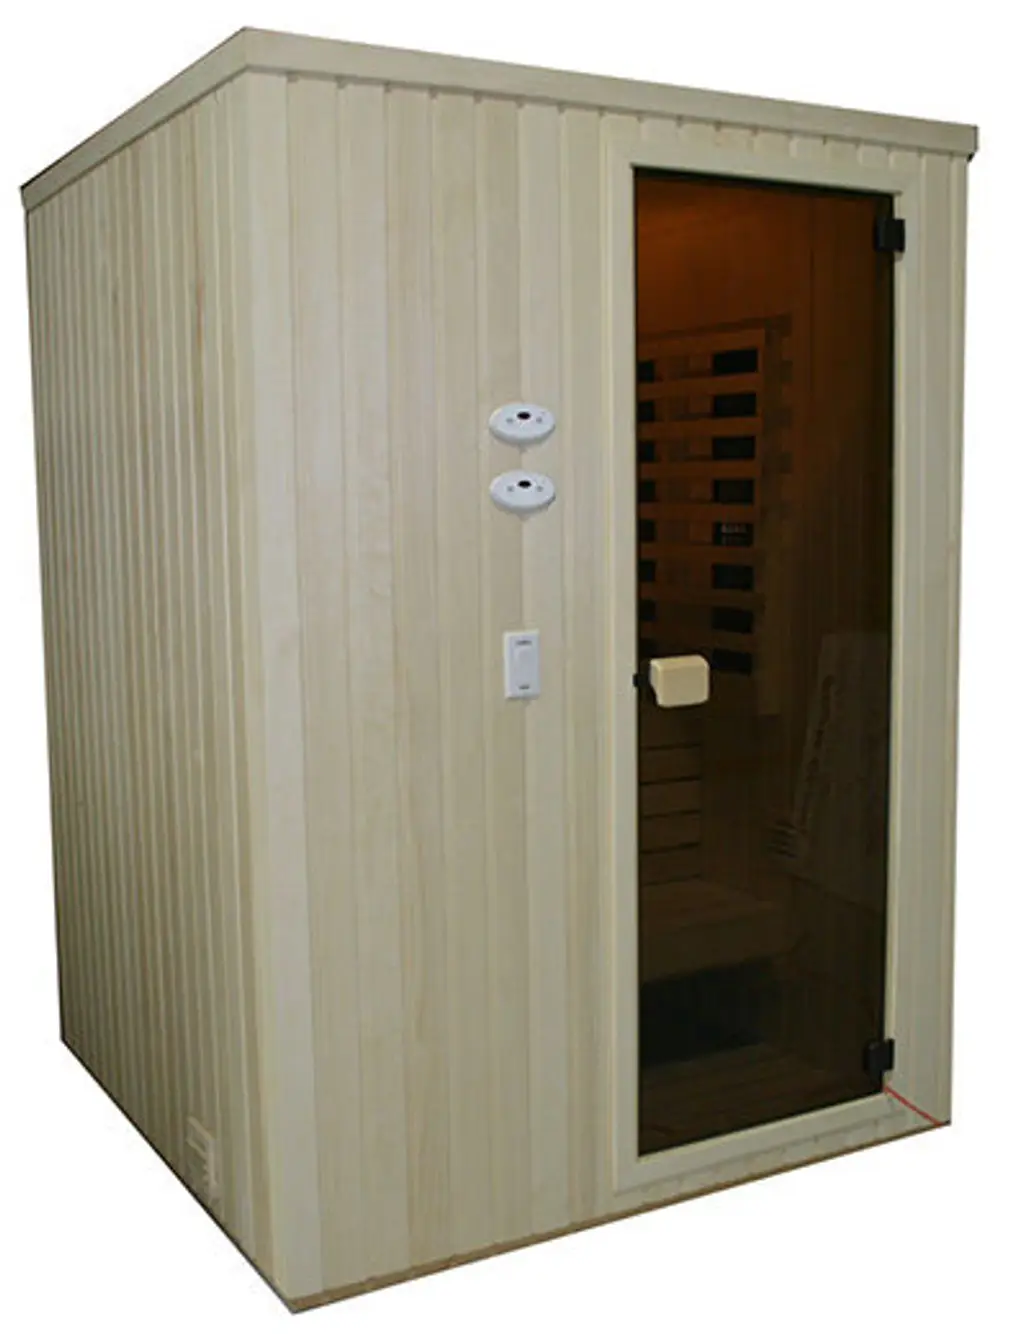 Laatu Combo Infrared/Traditional Sauna Rooms: Model #LCIR-46